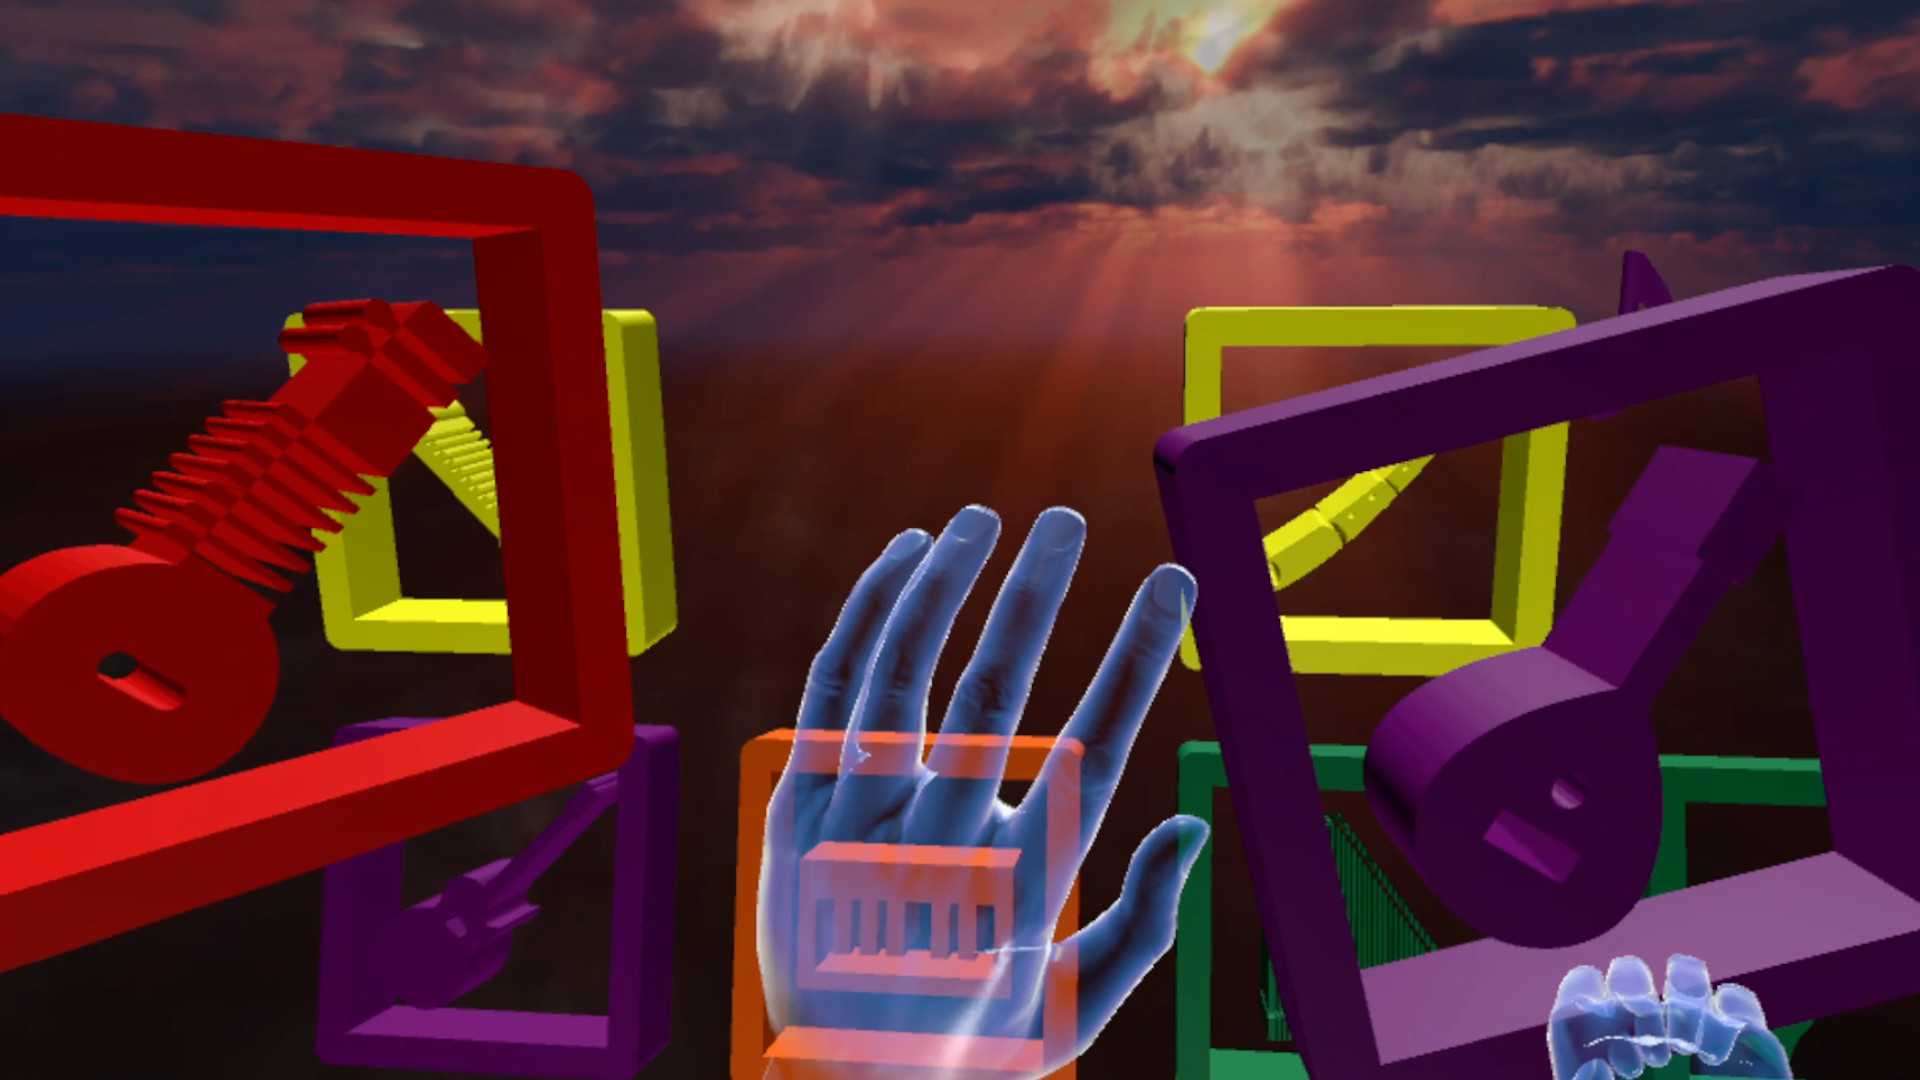 Jam Studio VR EHC - Fingerprints in the Sky - Craig Chaquico Bundle